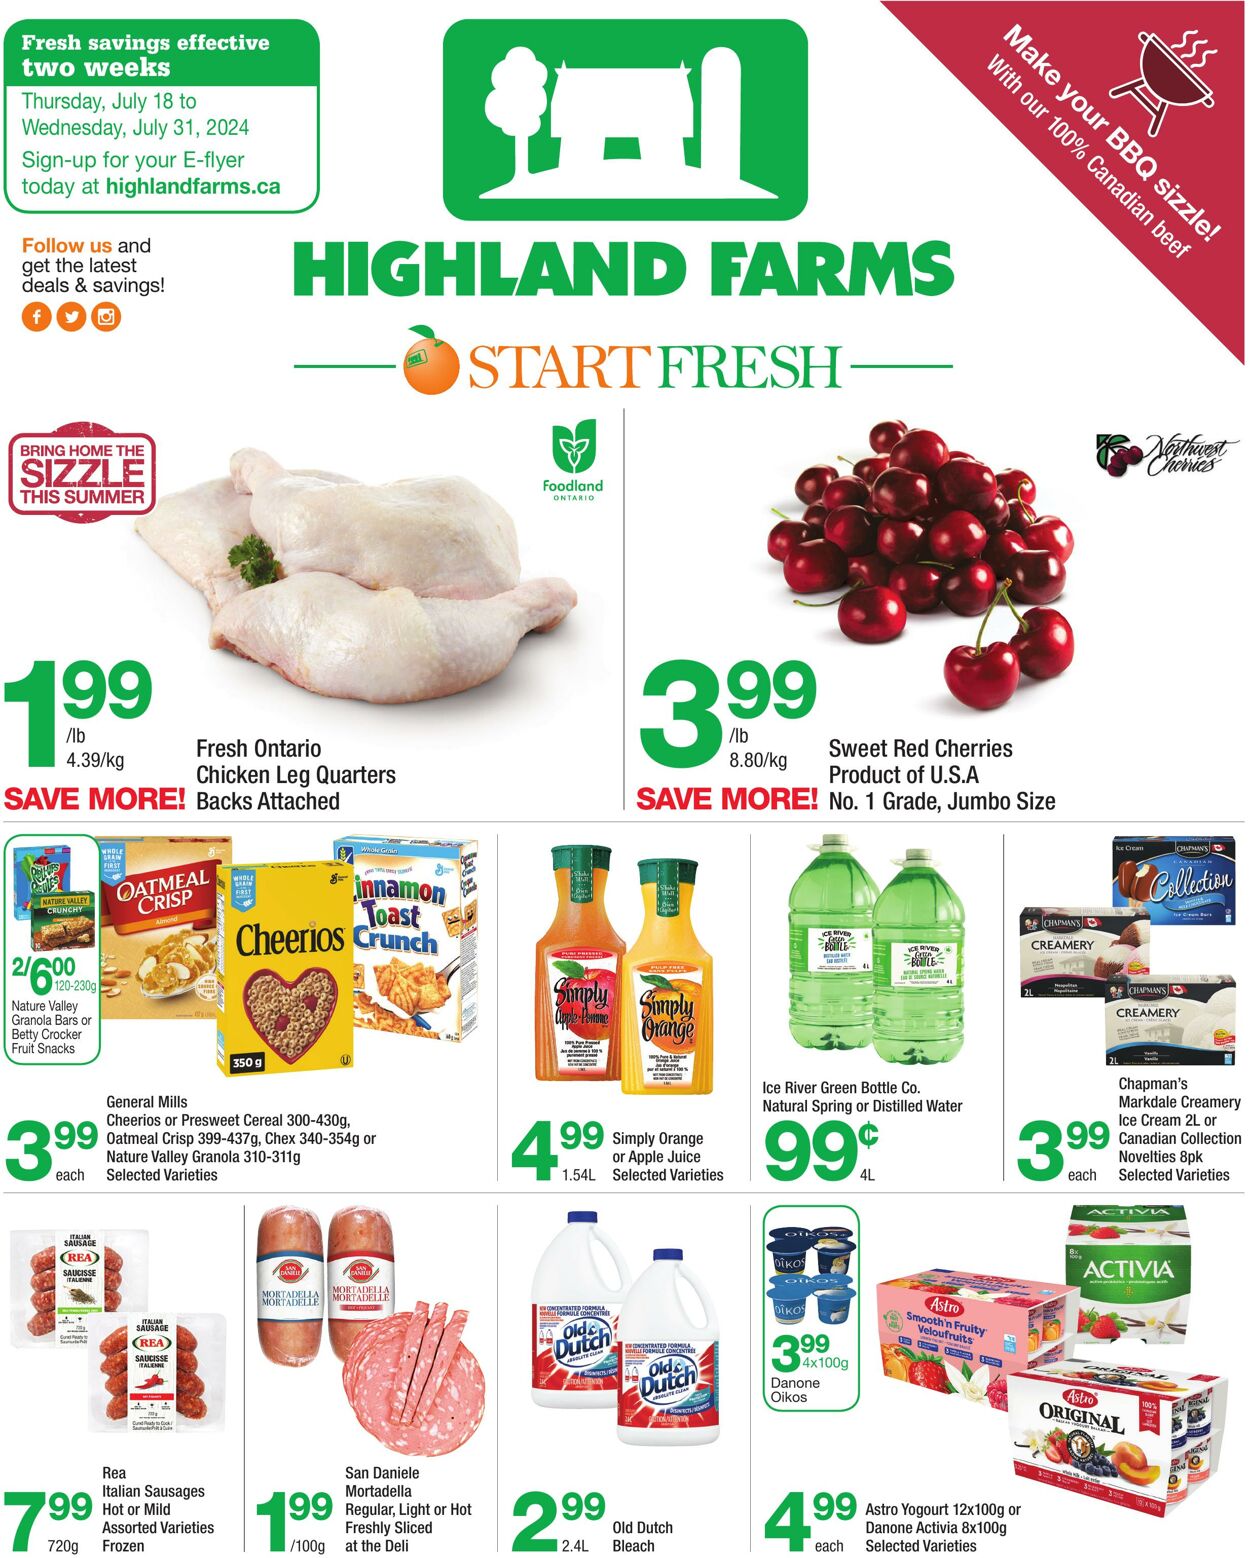 Highland Farms Promotional flyers